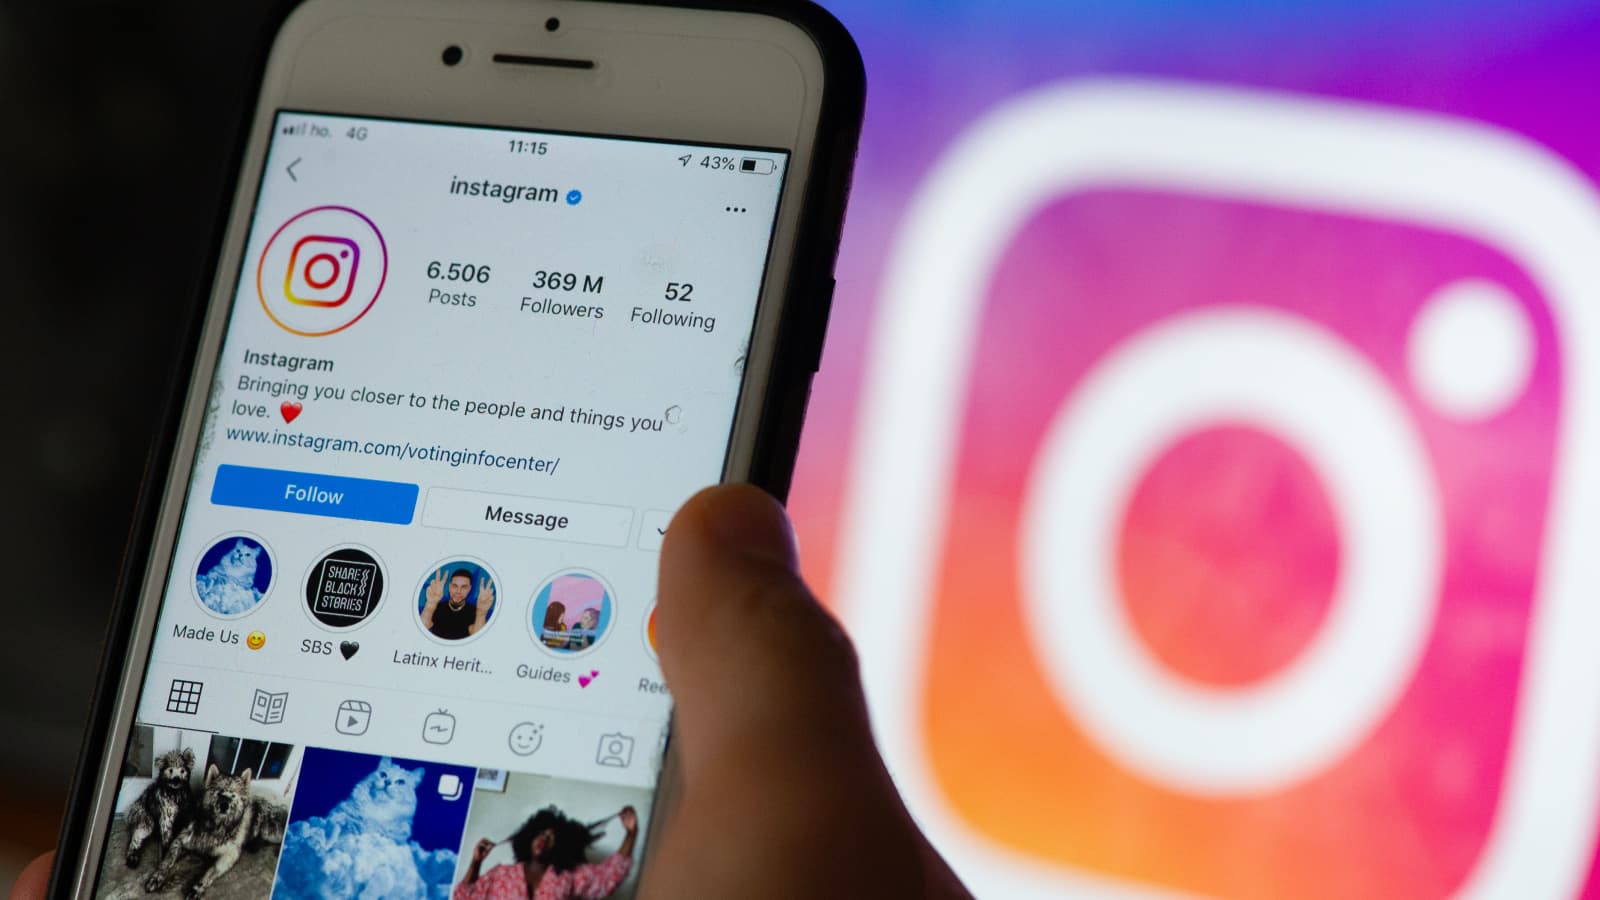 instagram 1 million users 2.5 months